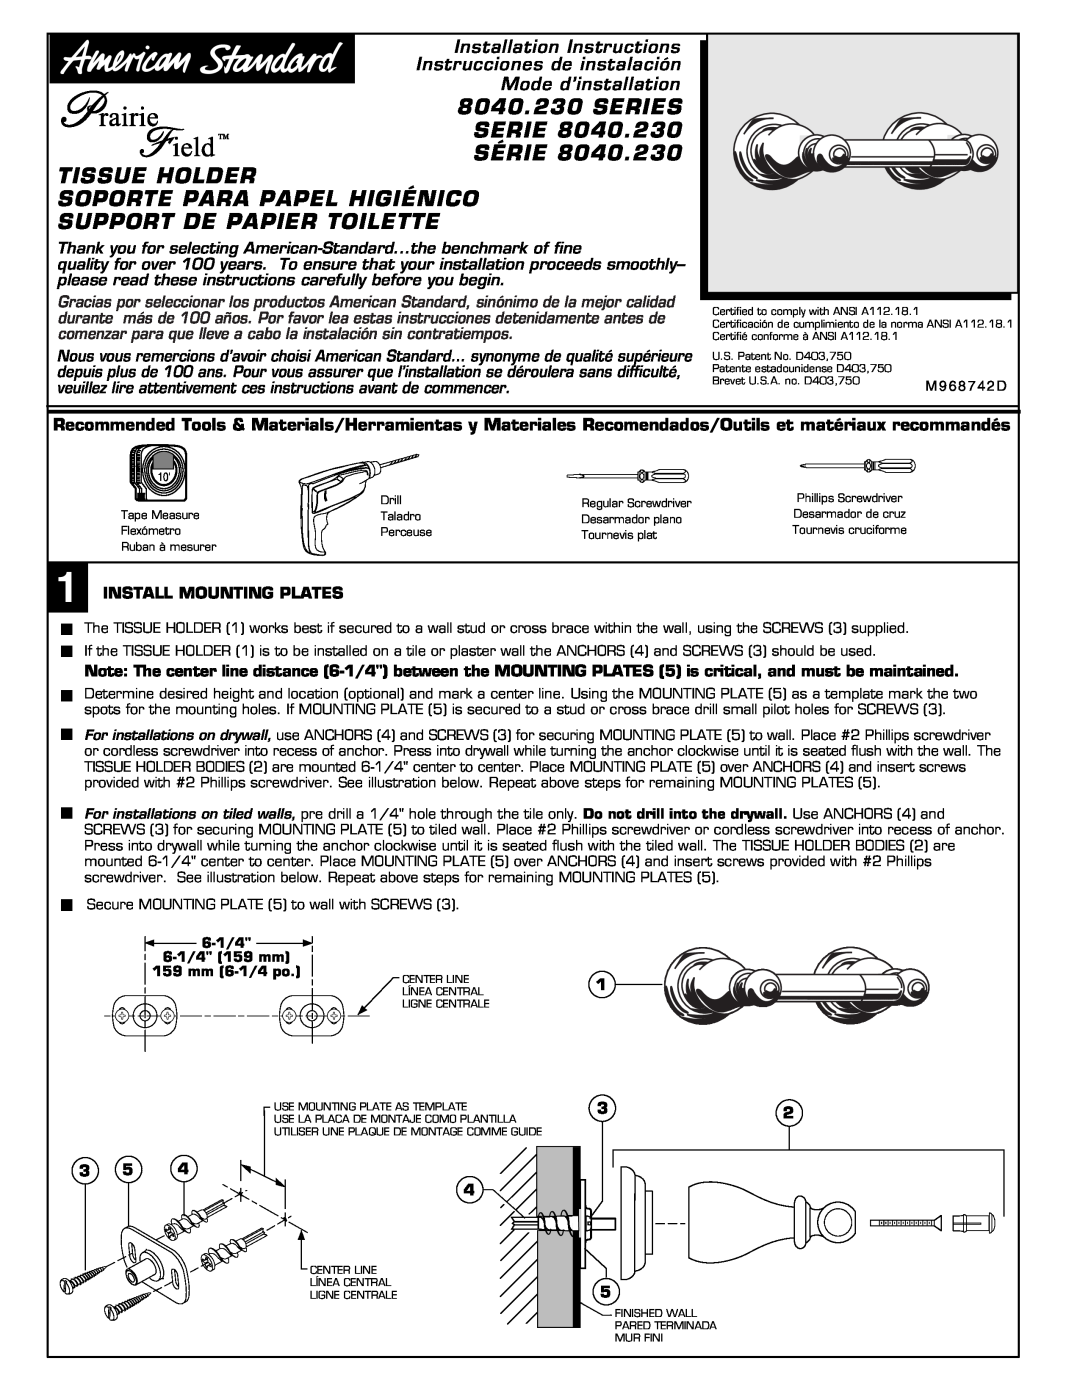 American Standard installation instructions SERIES SERIE 8040.230 SÉRIE, Tissue Holder, Installation Instructions 